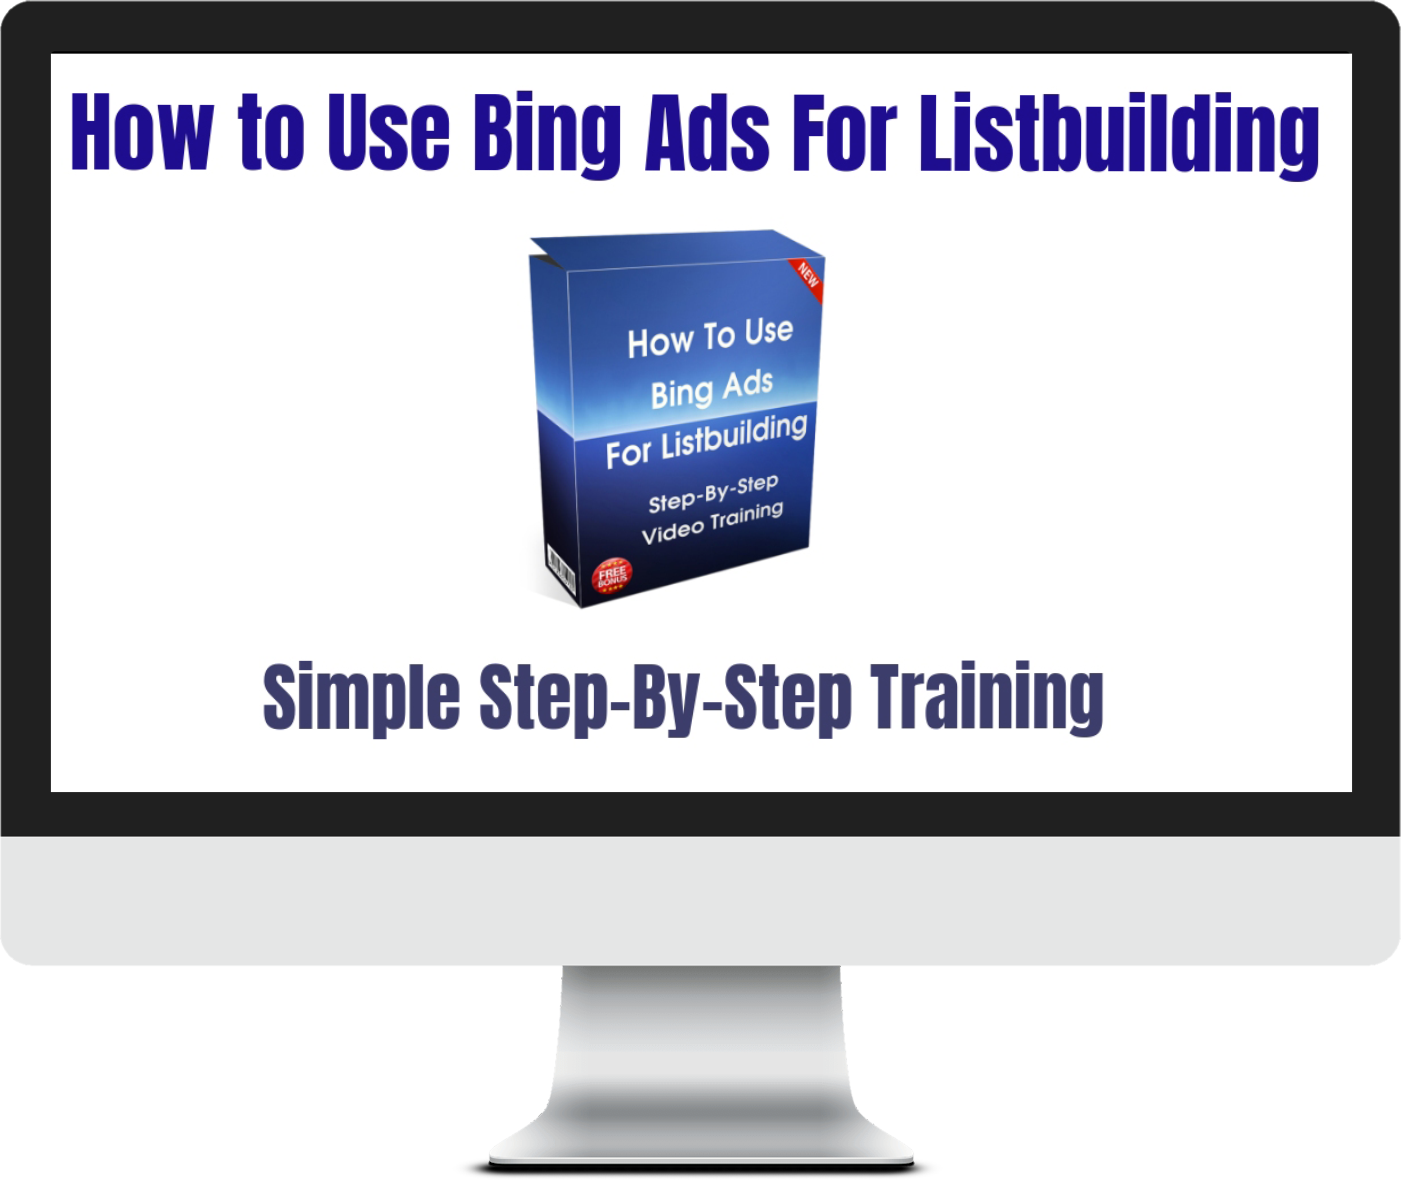 Bing ads for listbuilding